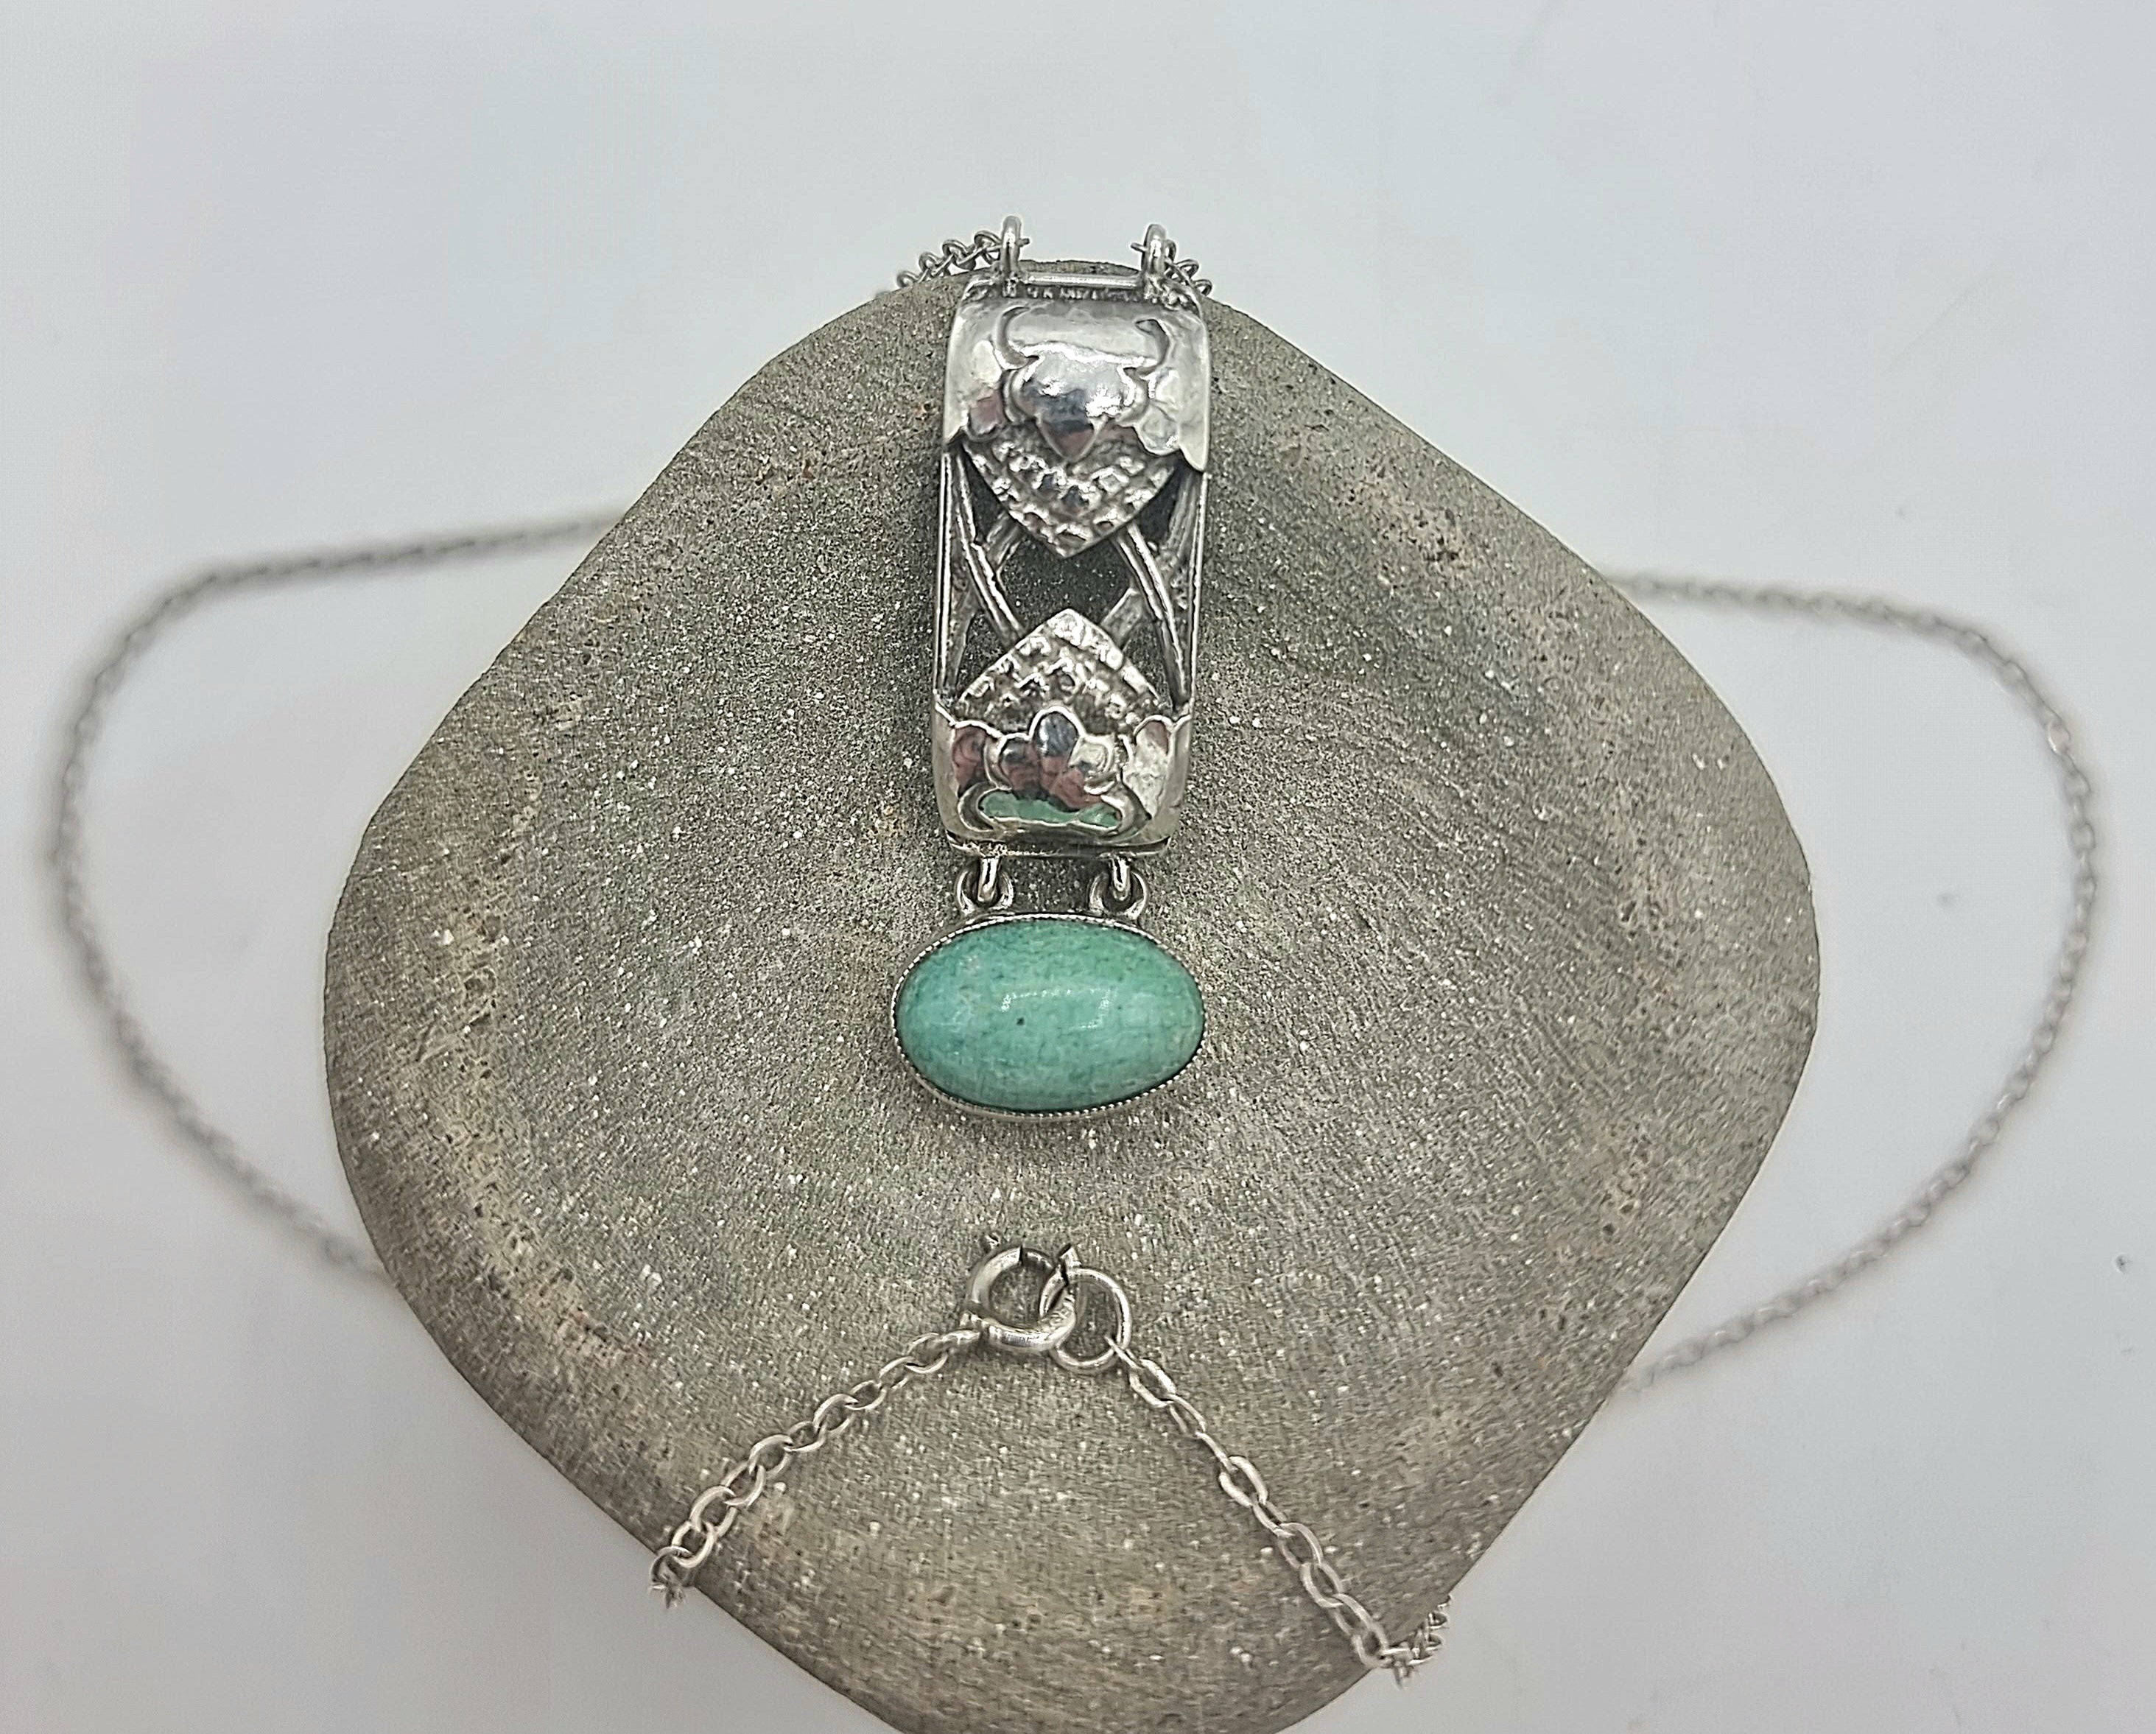 Art Nouveau Jewellery - Silver Necklace - Amazonite gemstone Pendant